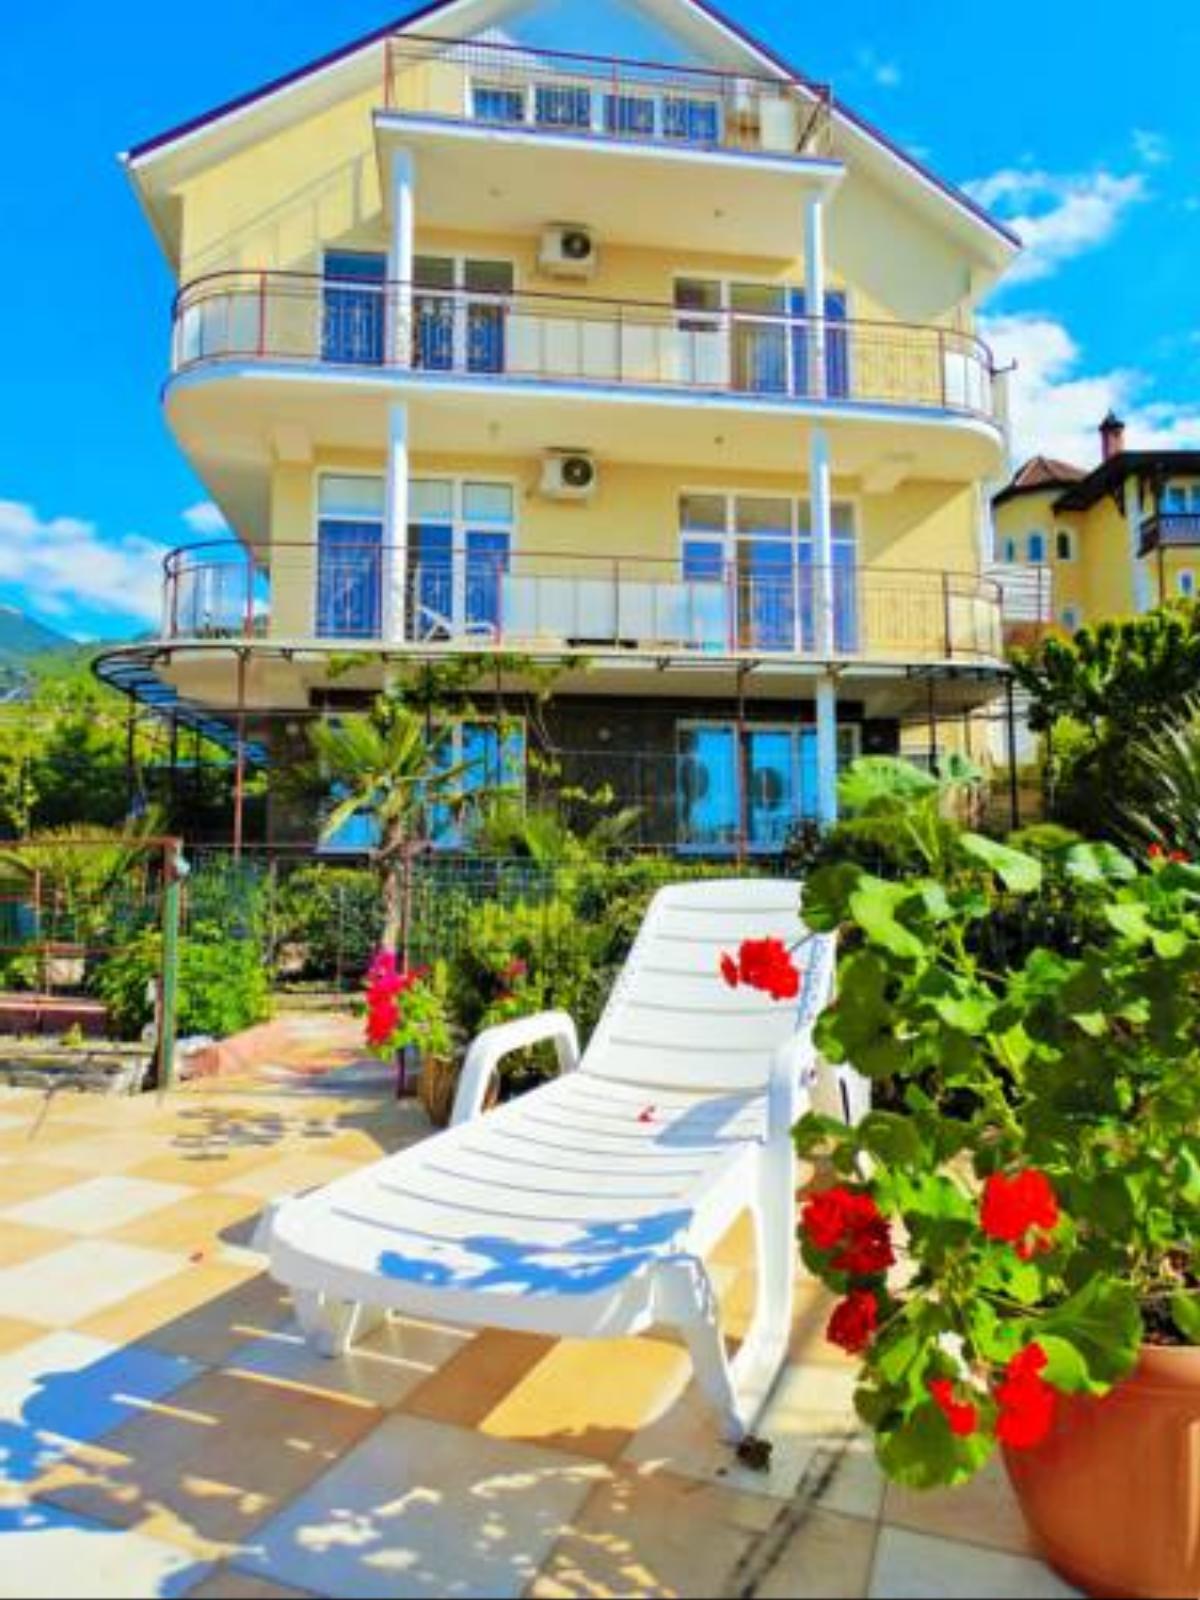 U Kamina Apartments Hotel Yalta Crimea